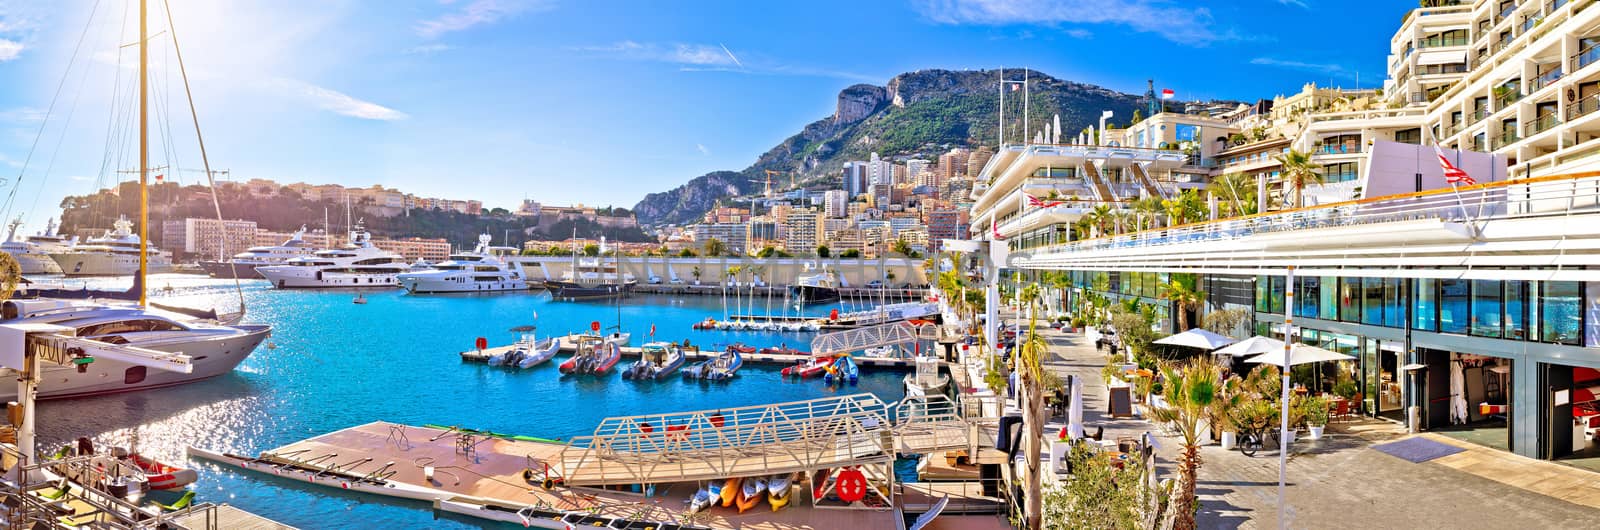 Monte Carlo yachting harbor and waterfront amazing panoramic vie by xbrchx